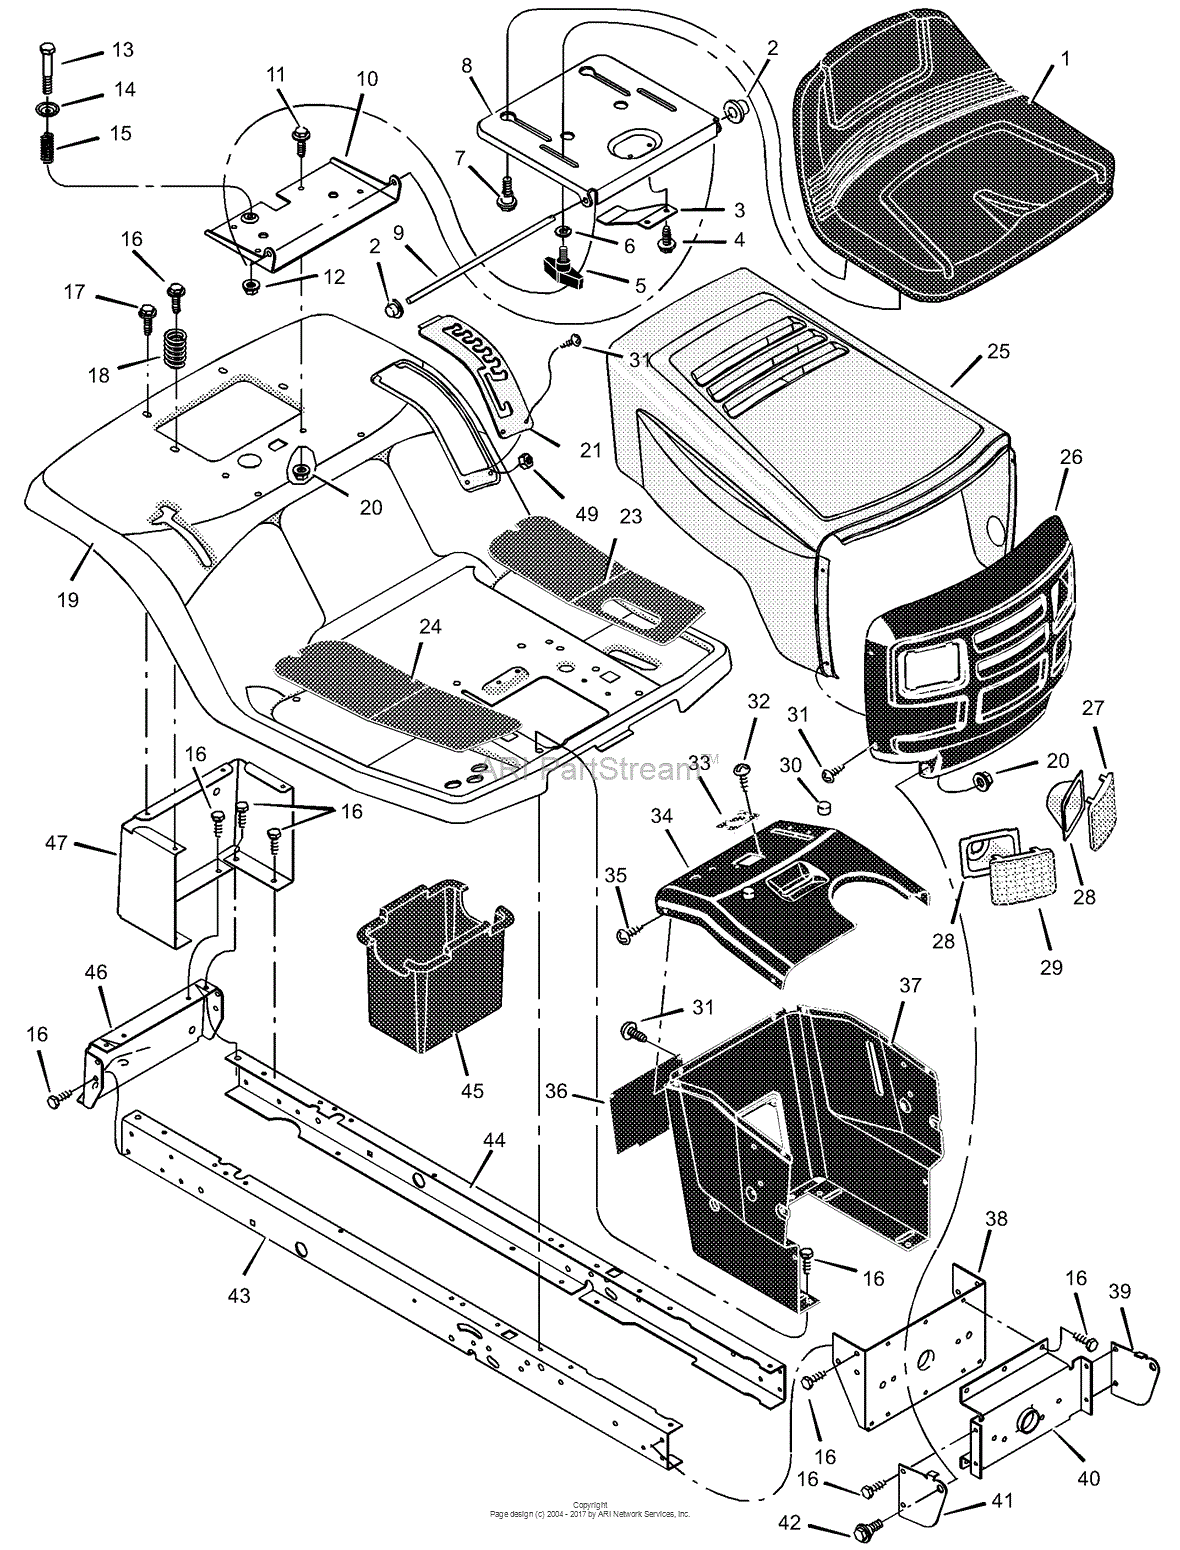 Murray 385008x51A - Lawn Tractor (2002) Parts Diagrams